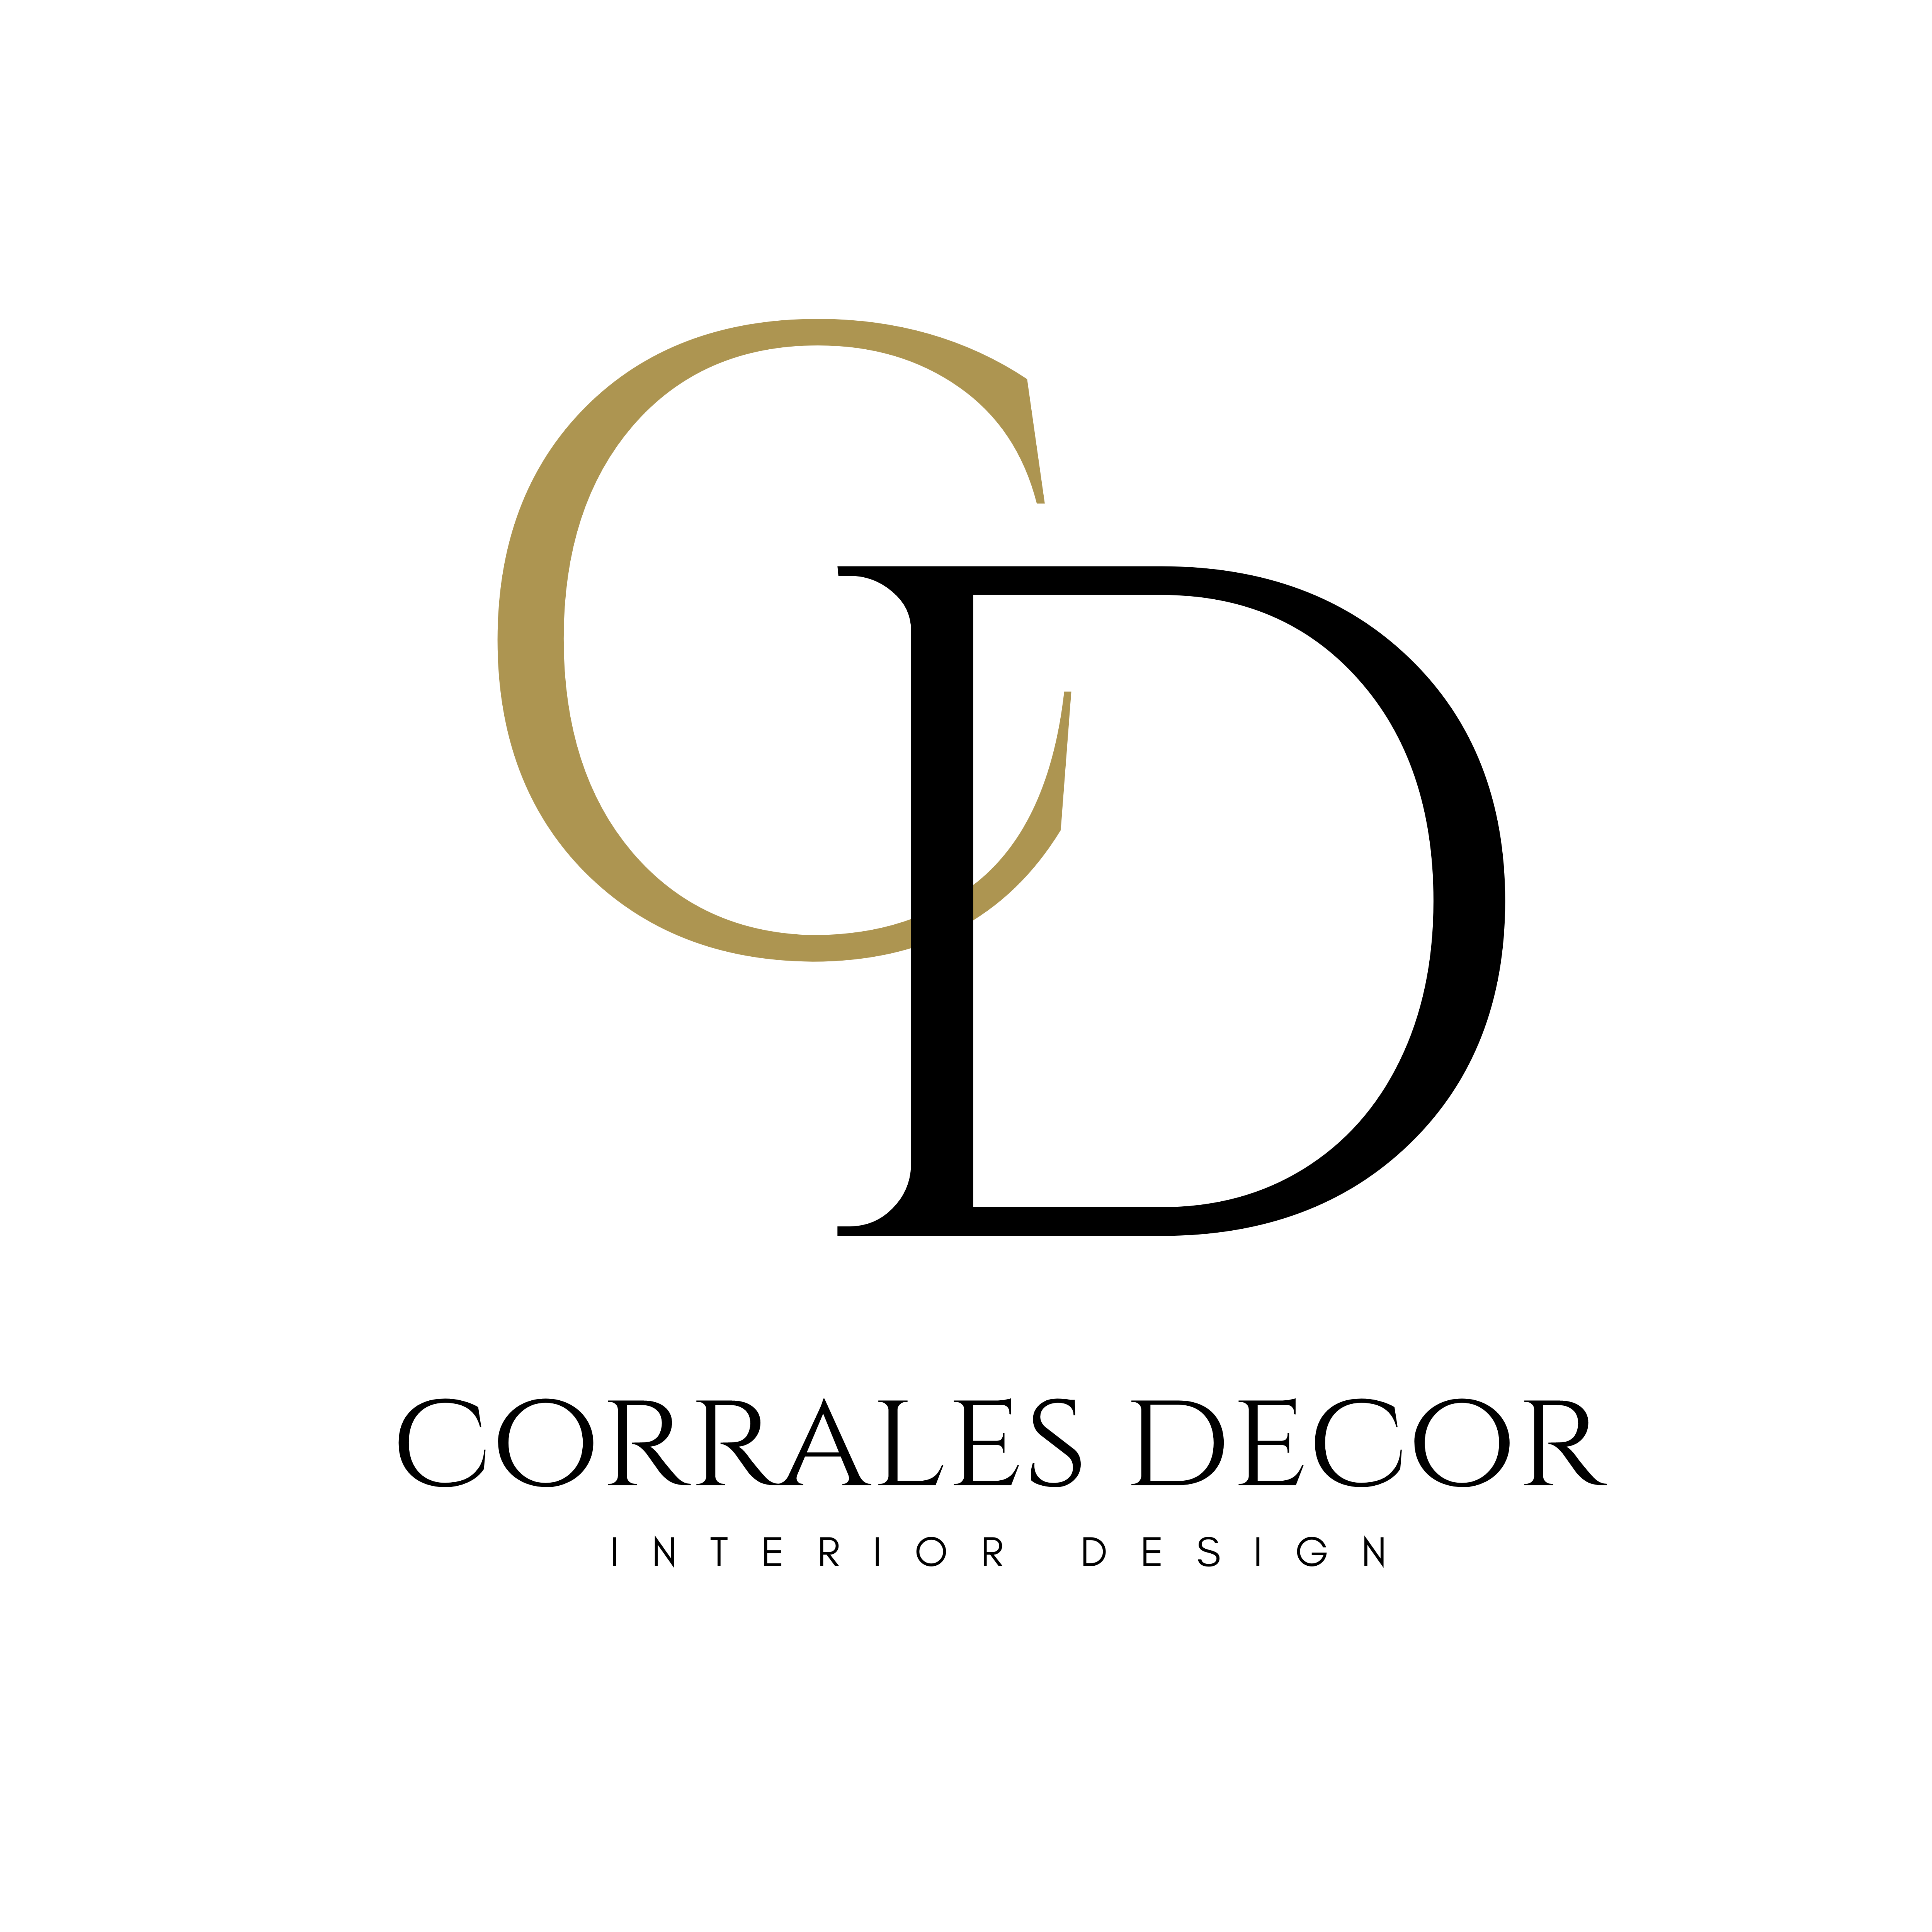 Corrales Decor logo